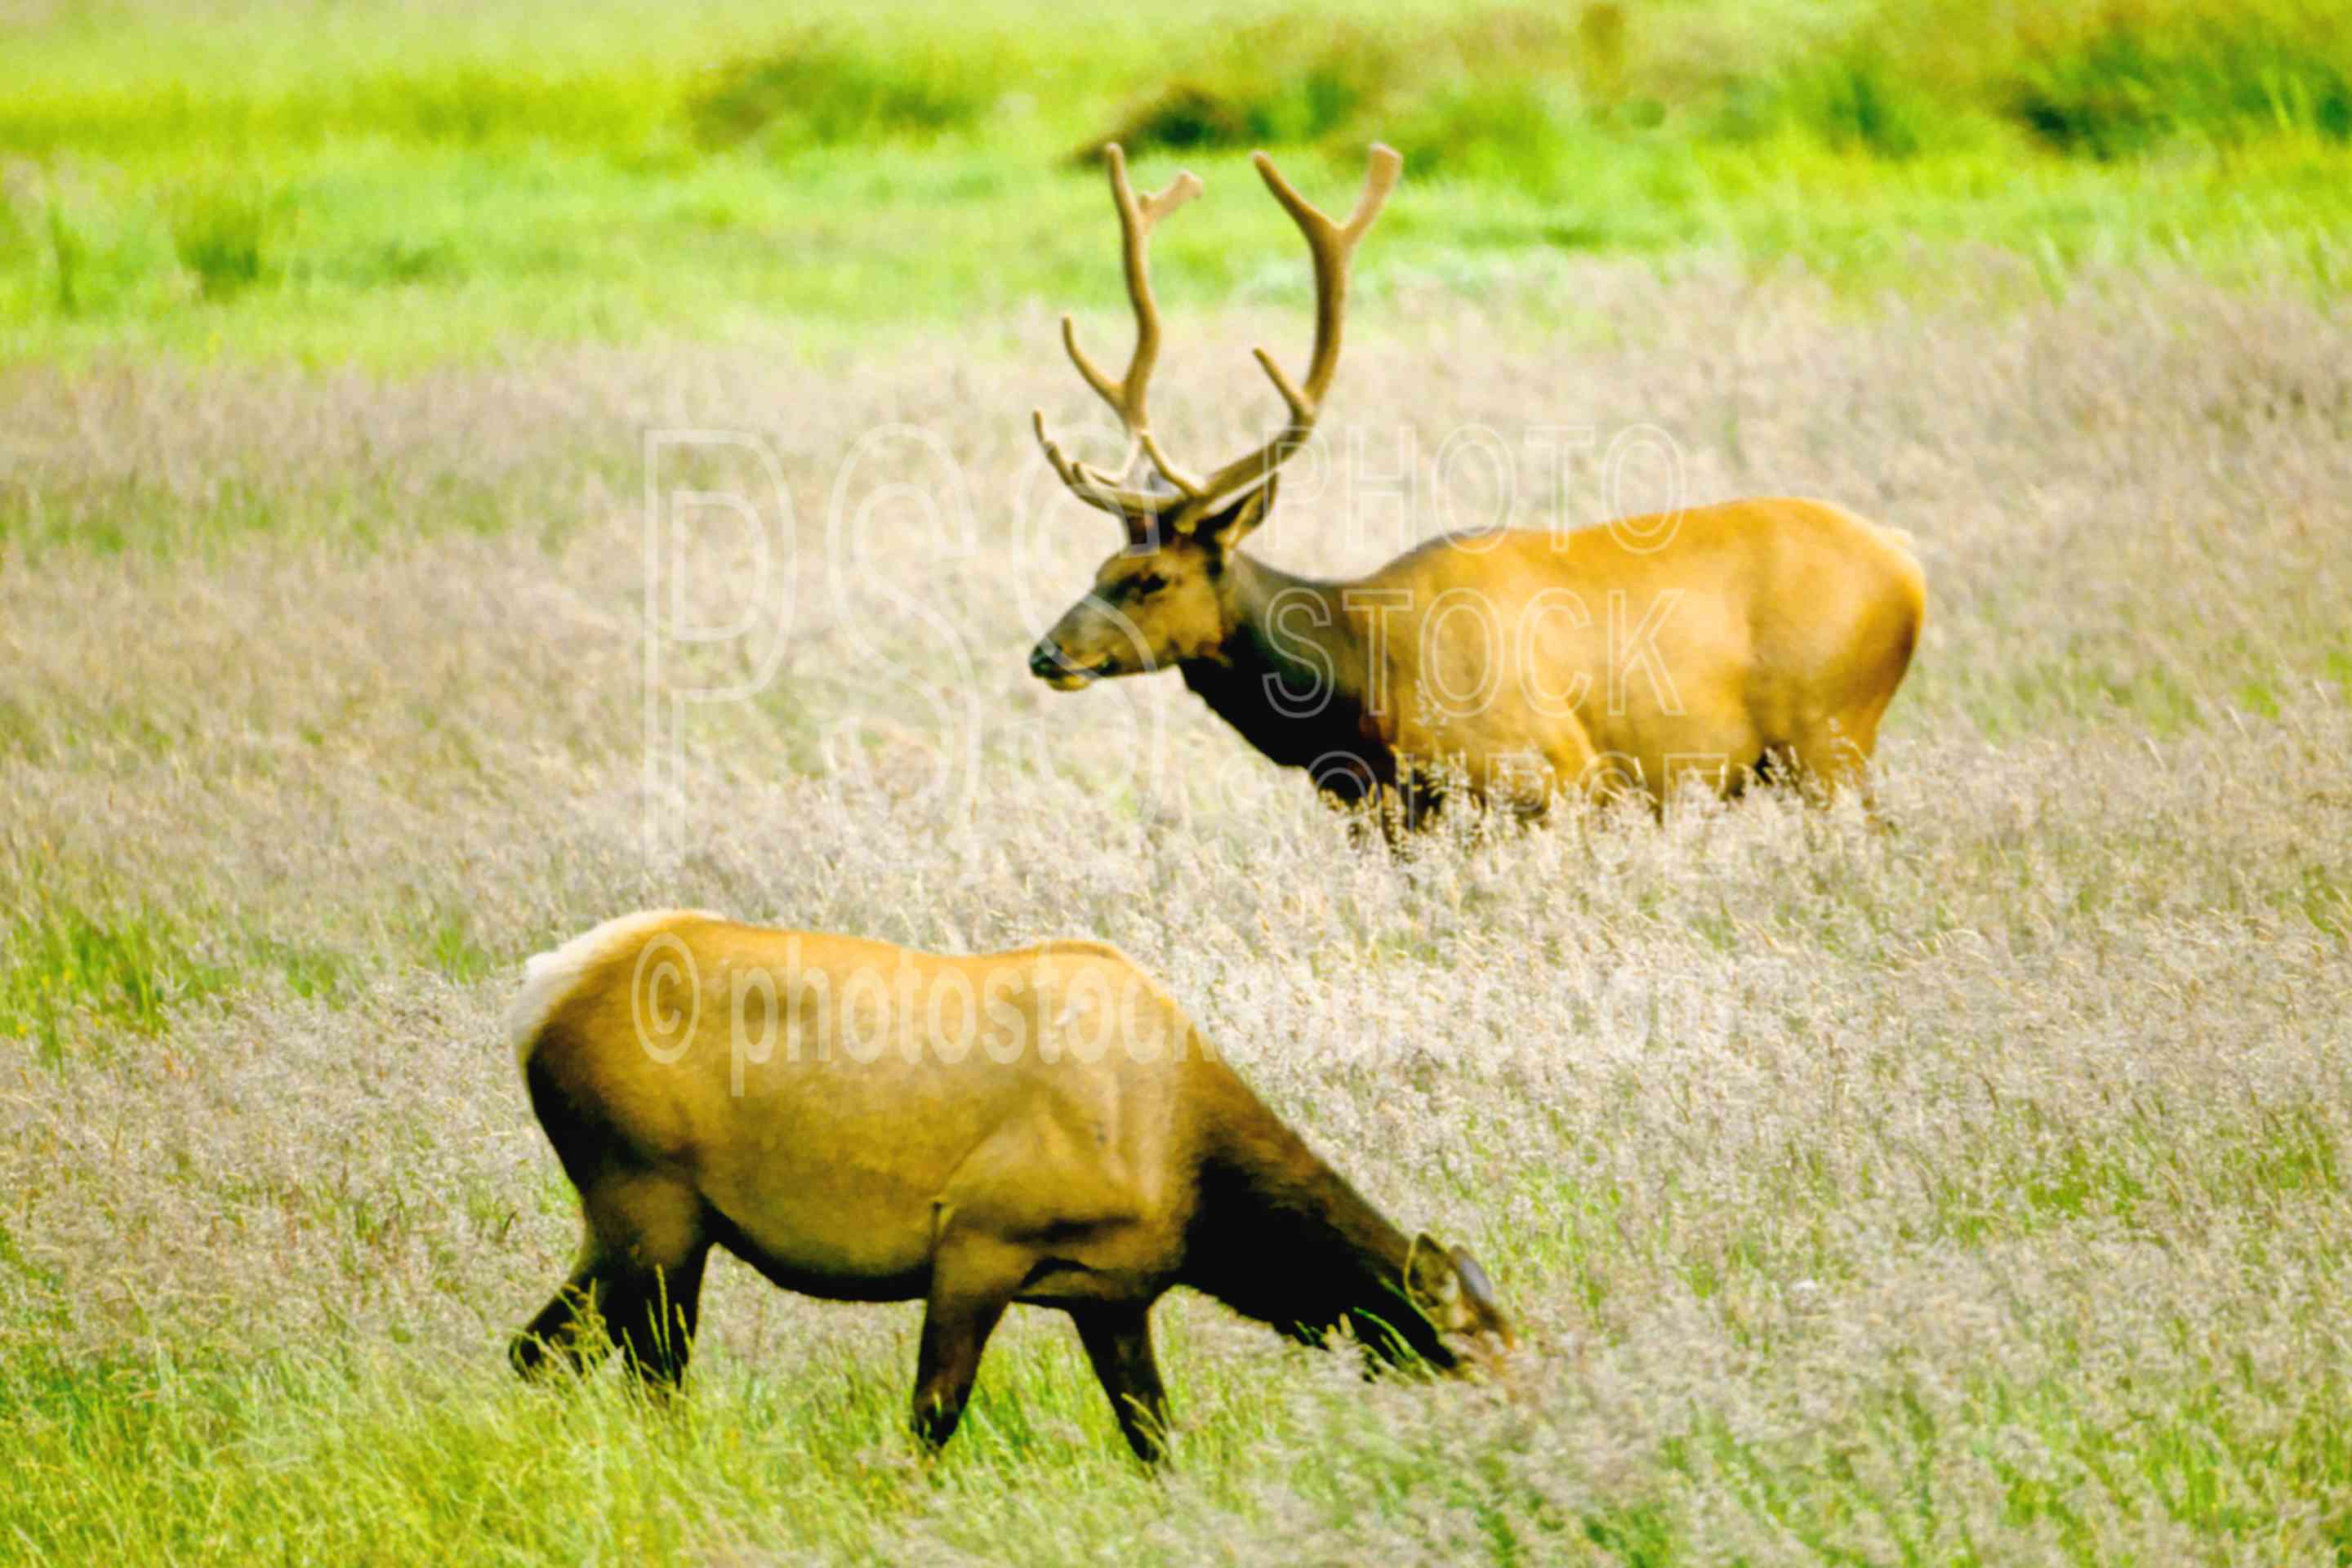 Roosevelt Elk,elks,usas,animals